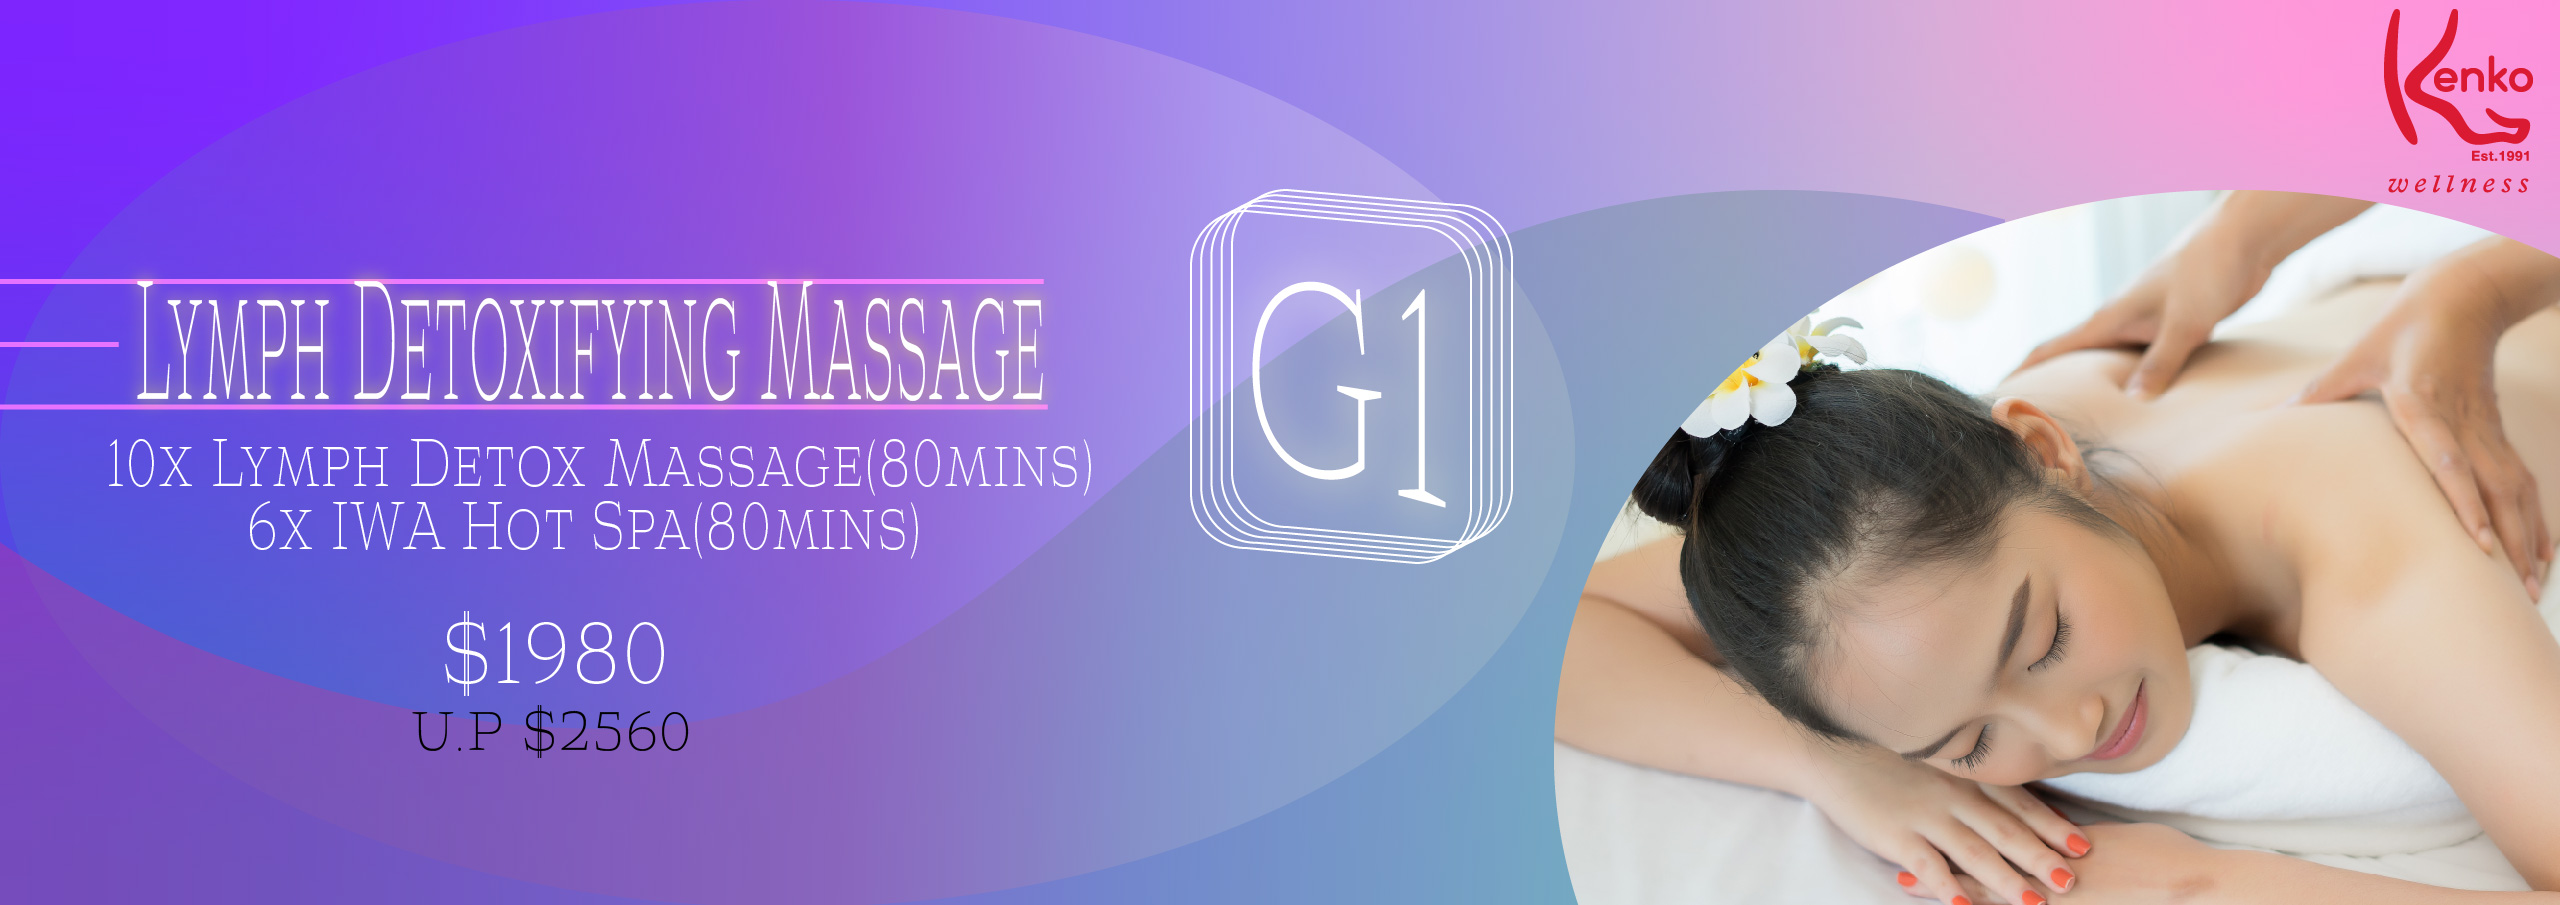 [G1] Lymph Detoxifying Massage Package